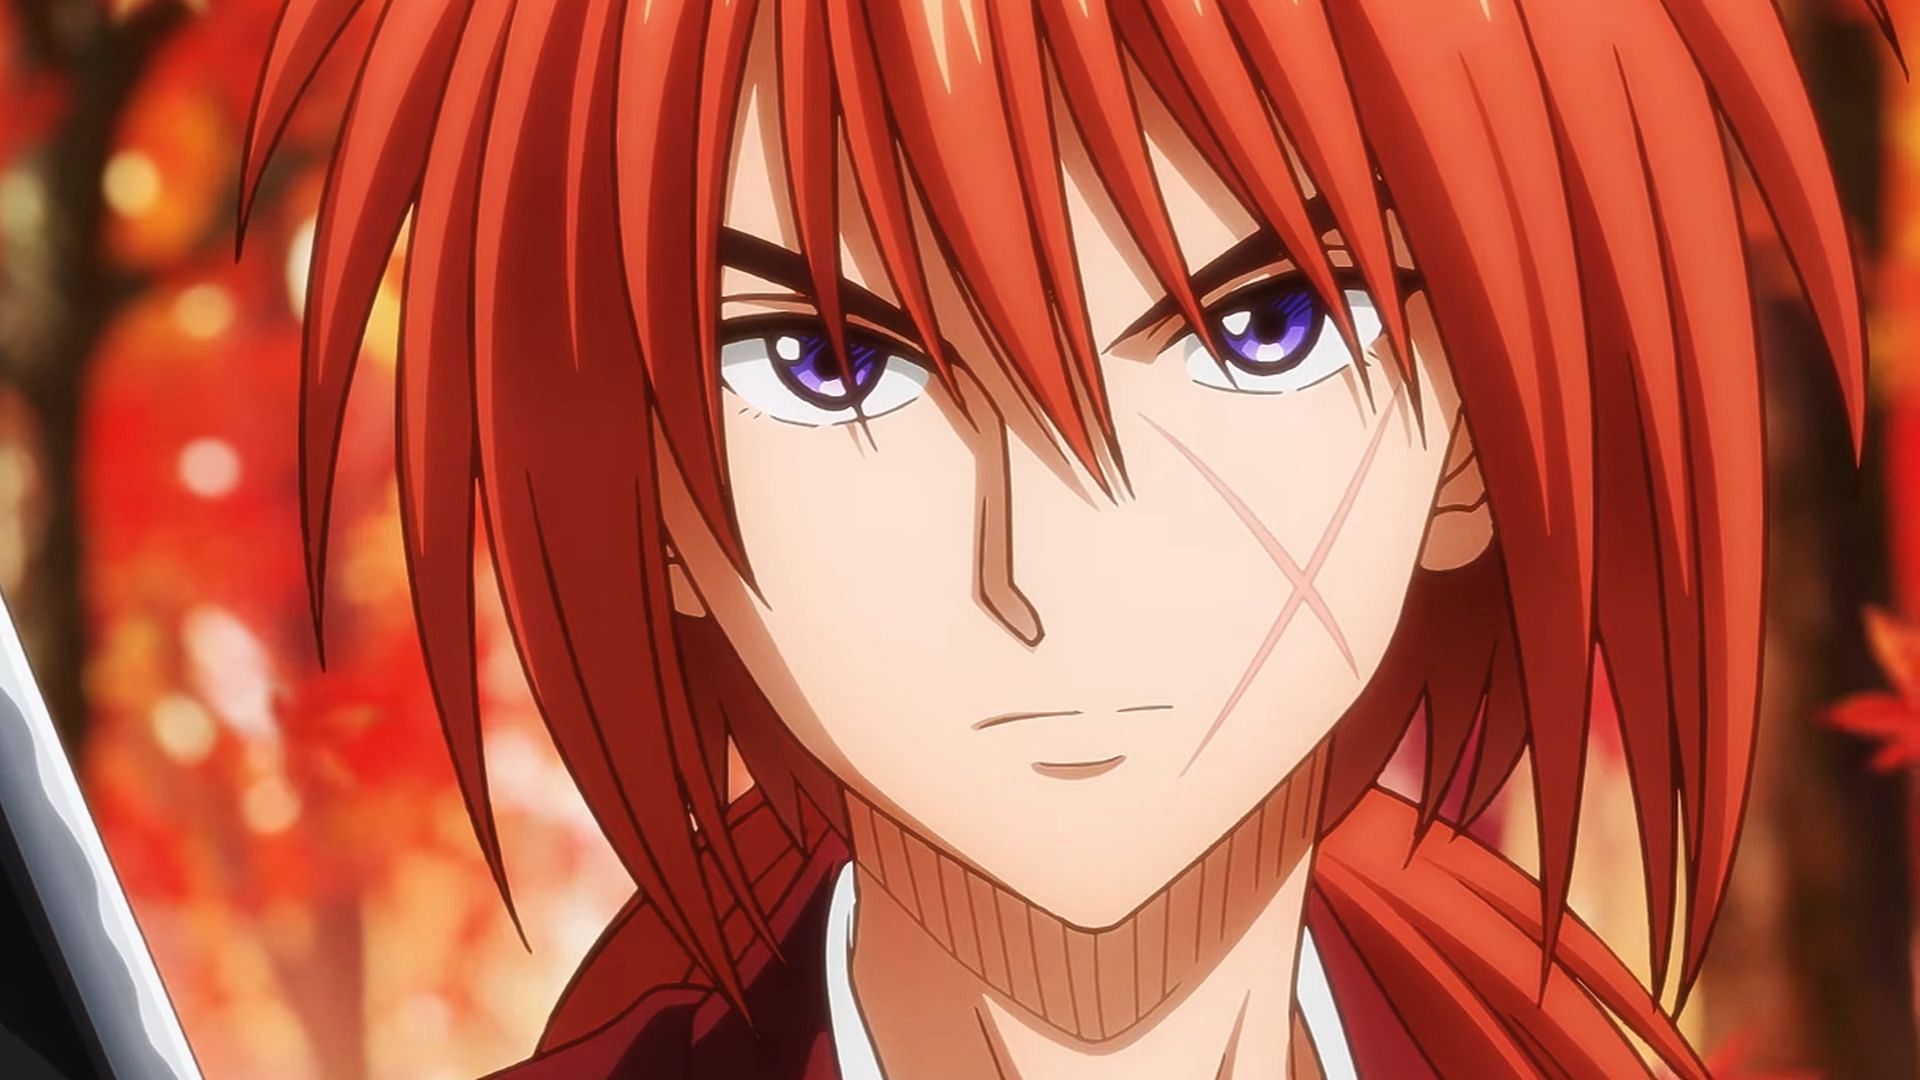 Kenshin as seen in the new series (Image via Studio Lidenfilms)